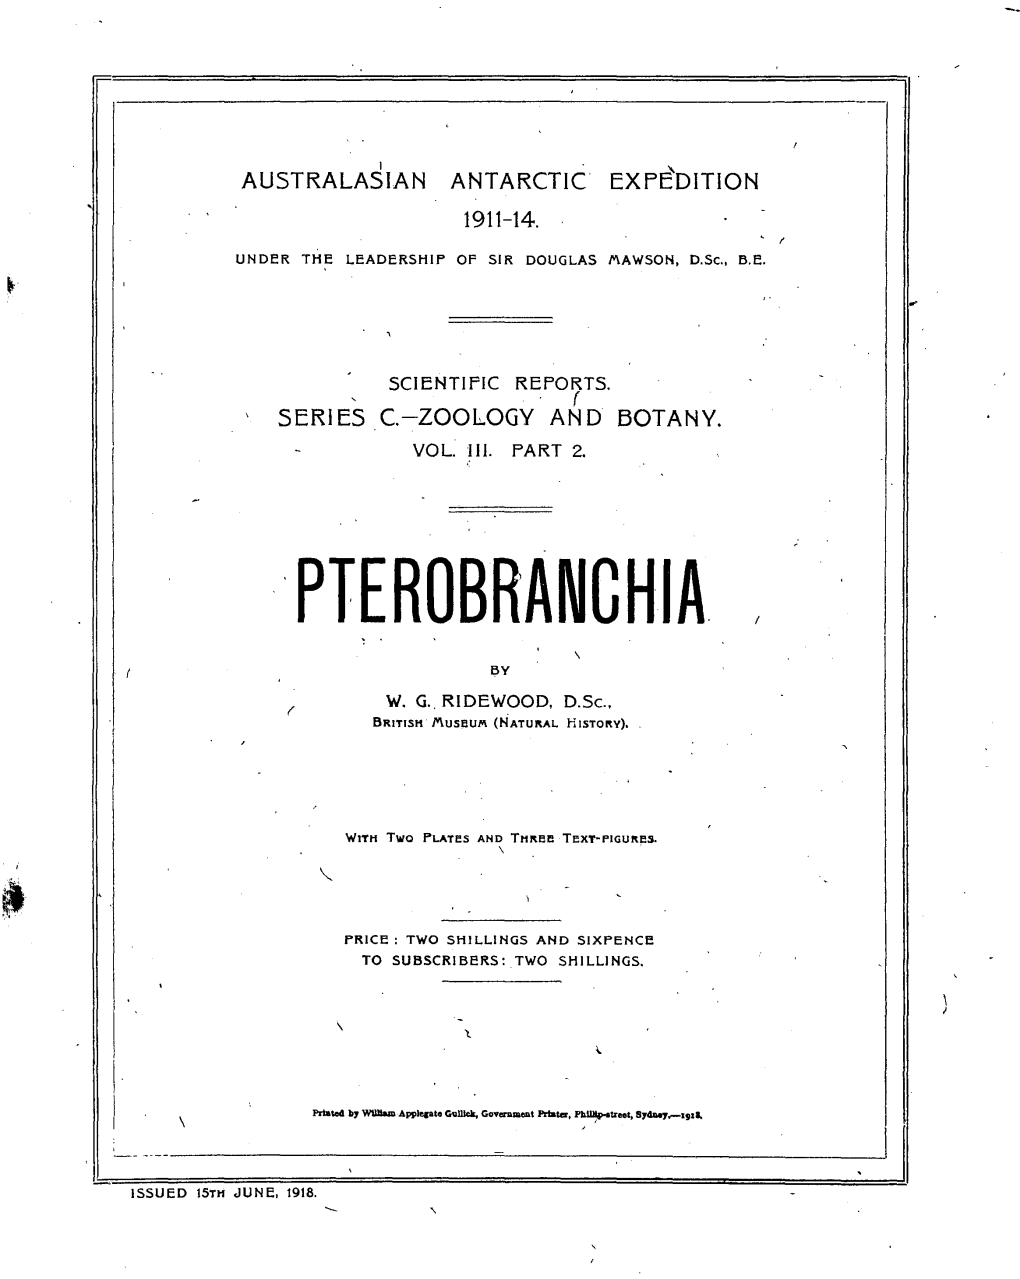 Part 2. Pterobranchia